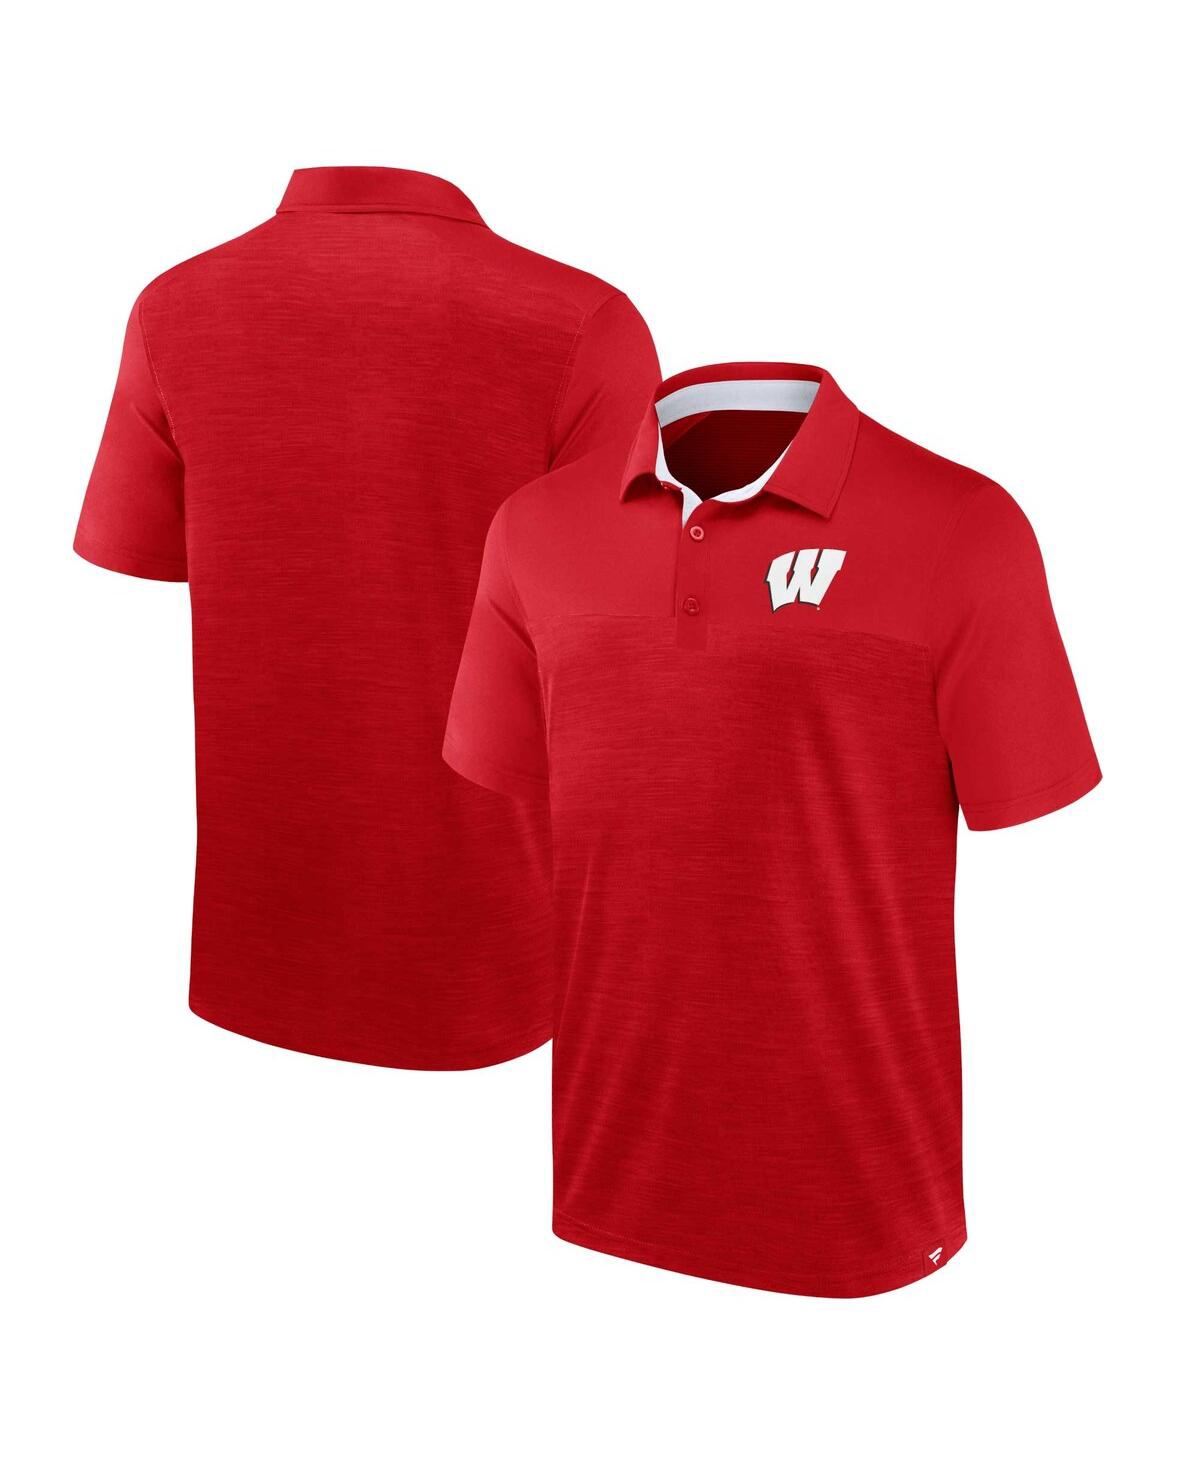 Shop Fanatics Men's  Heather Red Wisconsin Badgers Classic Homefield Polo Shirt